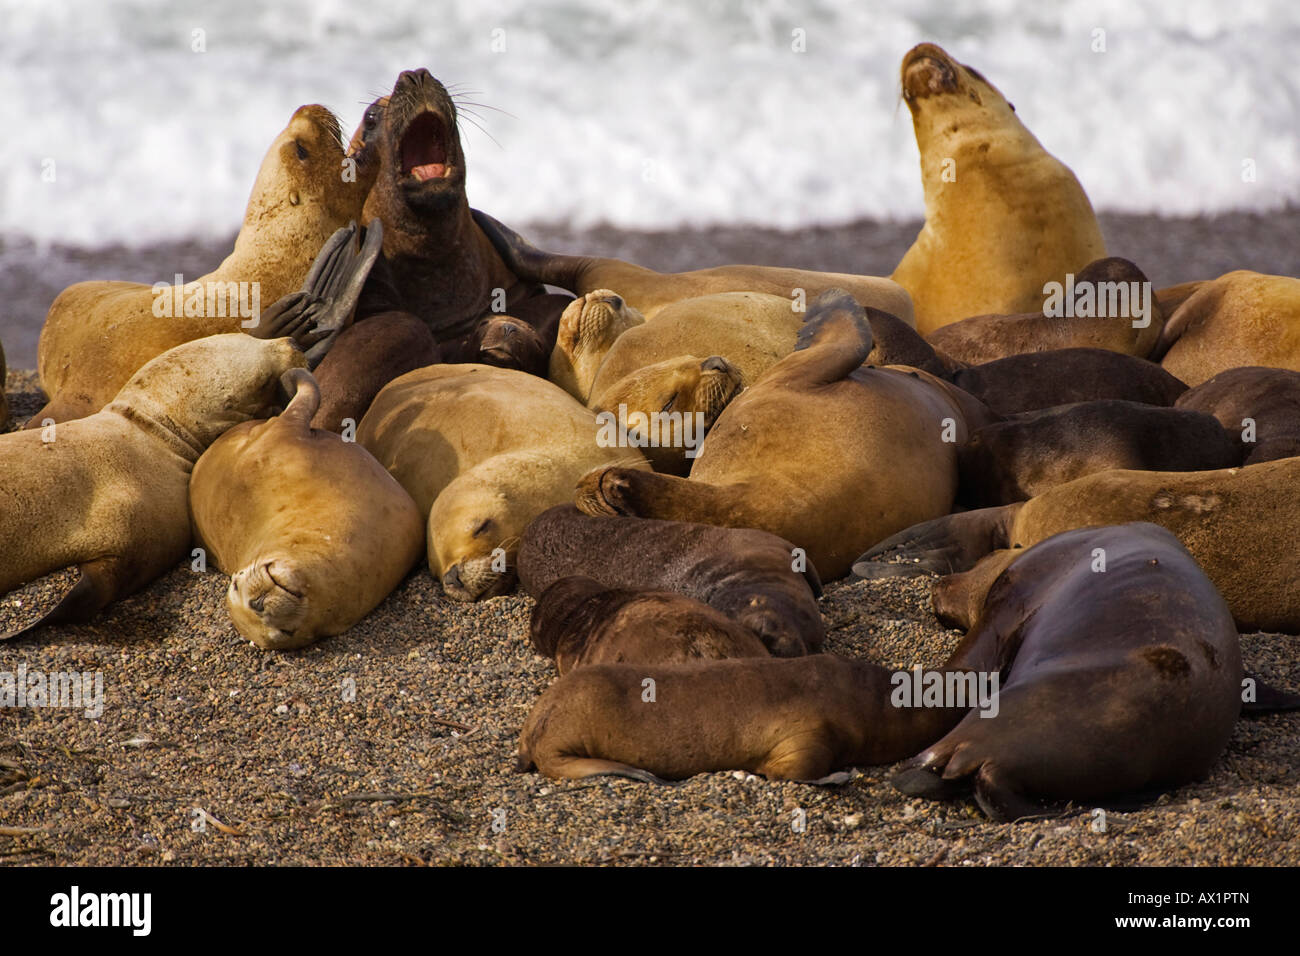 Southern Sea Lion colony (Otaria flavescens), peninsula Valdes, Patagonia, east coast, Atlantic Ozean, Argentina, South America Stock Photo